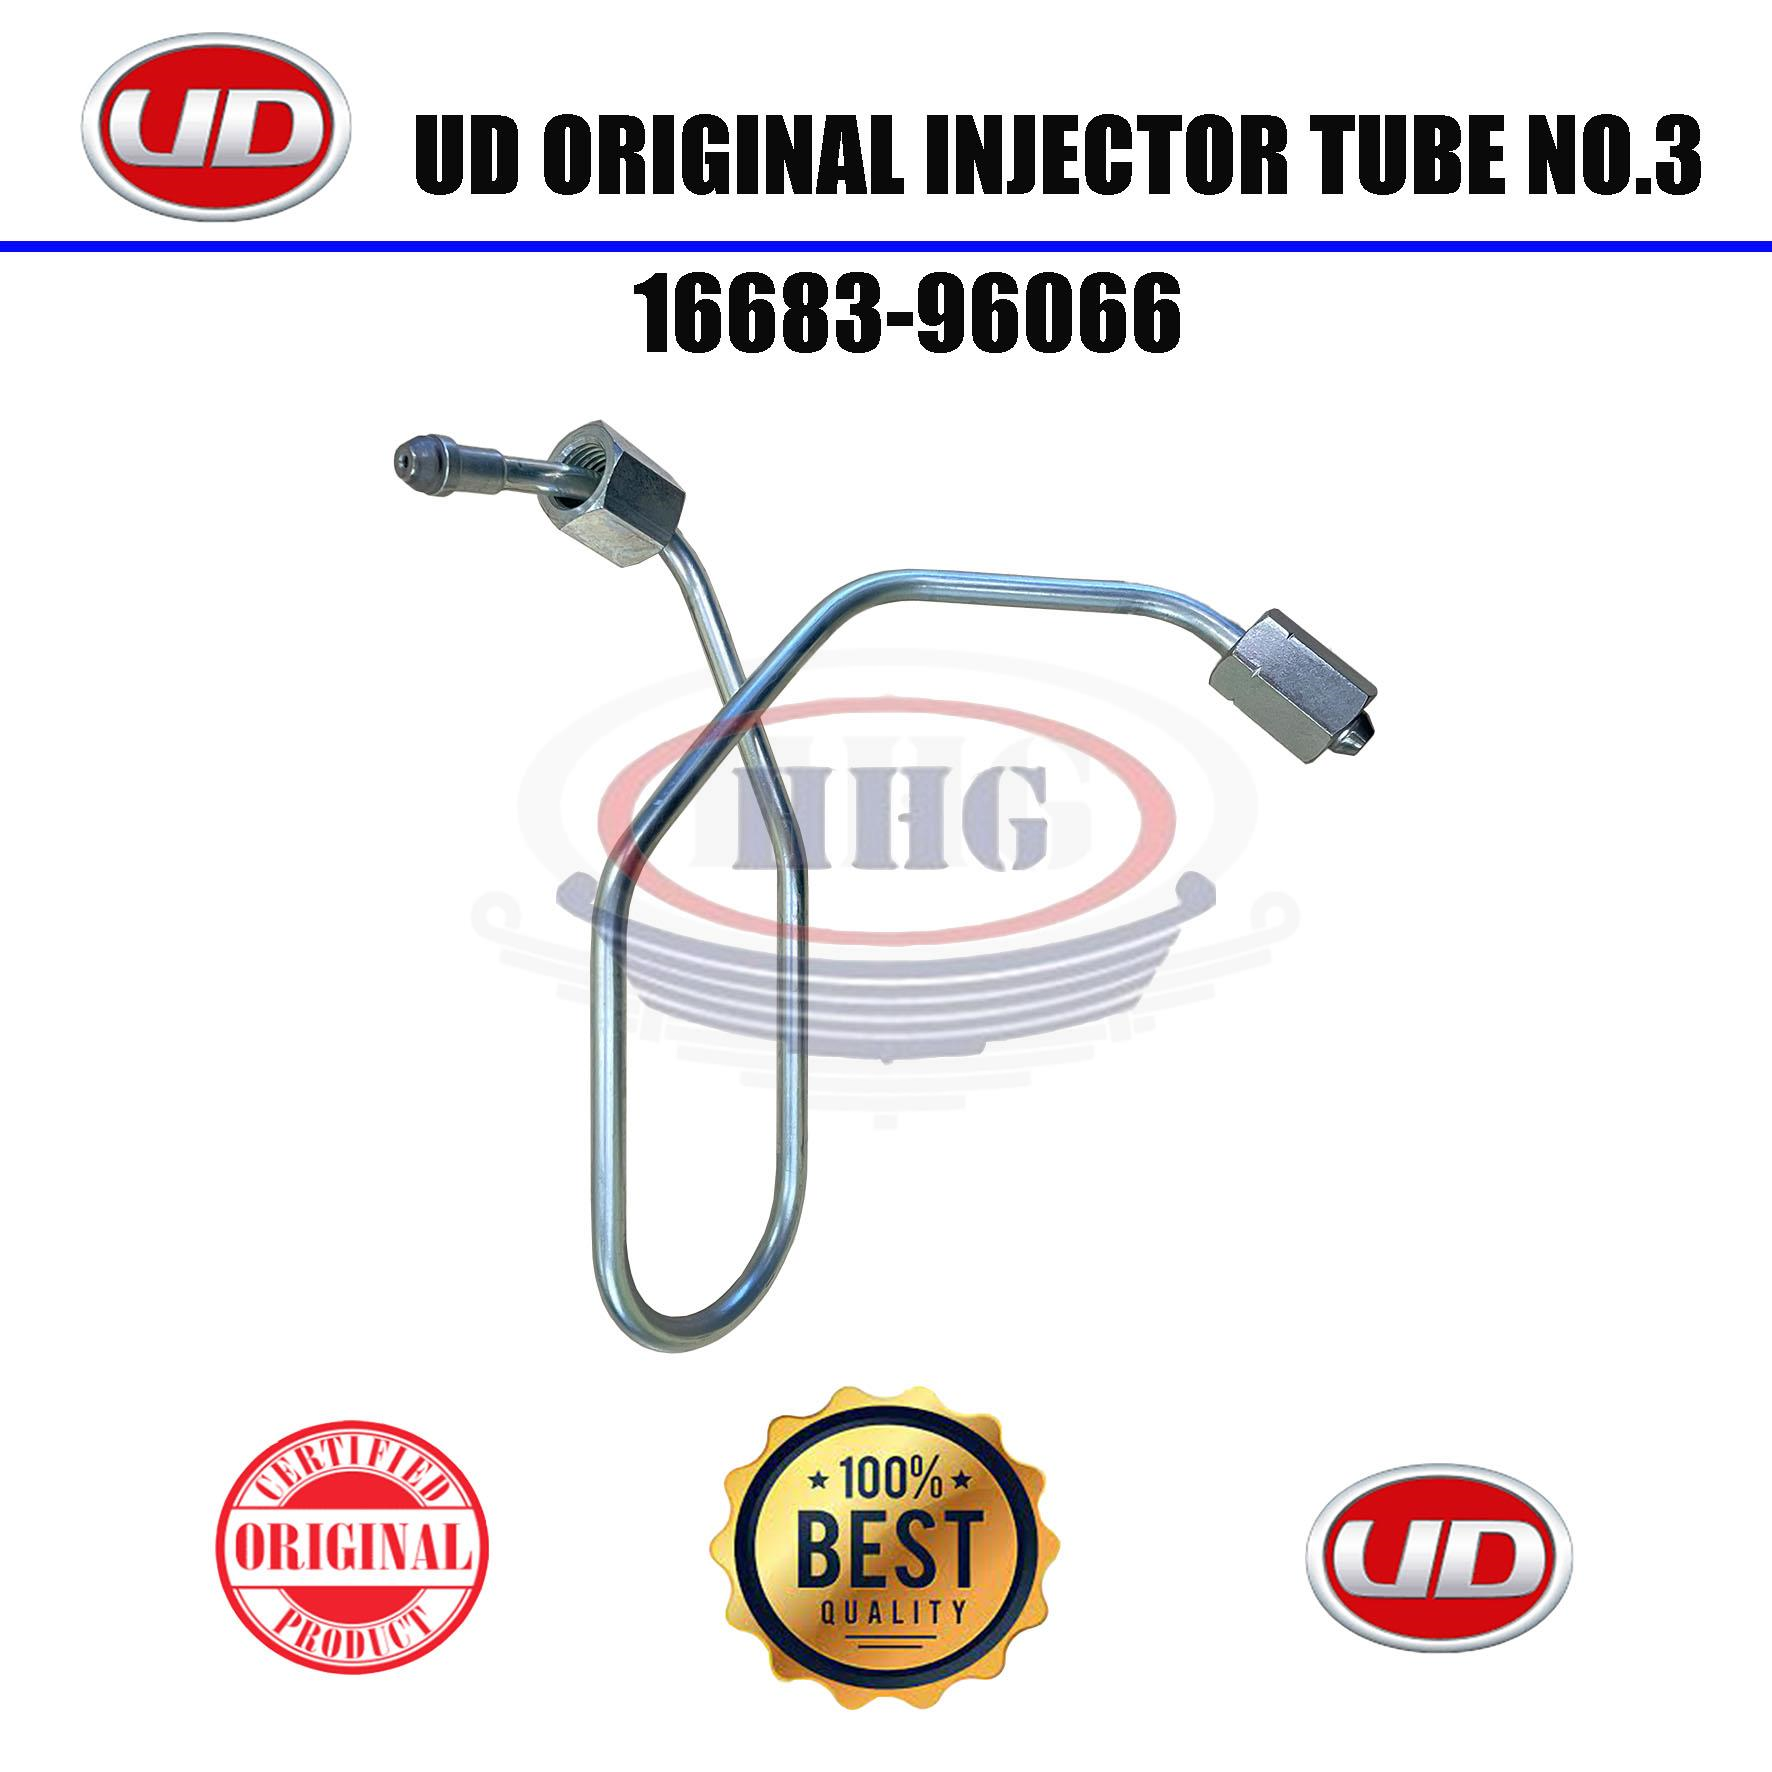 UD Original PE6T PF6 Injector Tube No.3 (16683-96066)